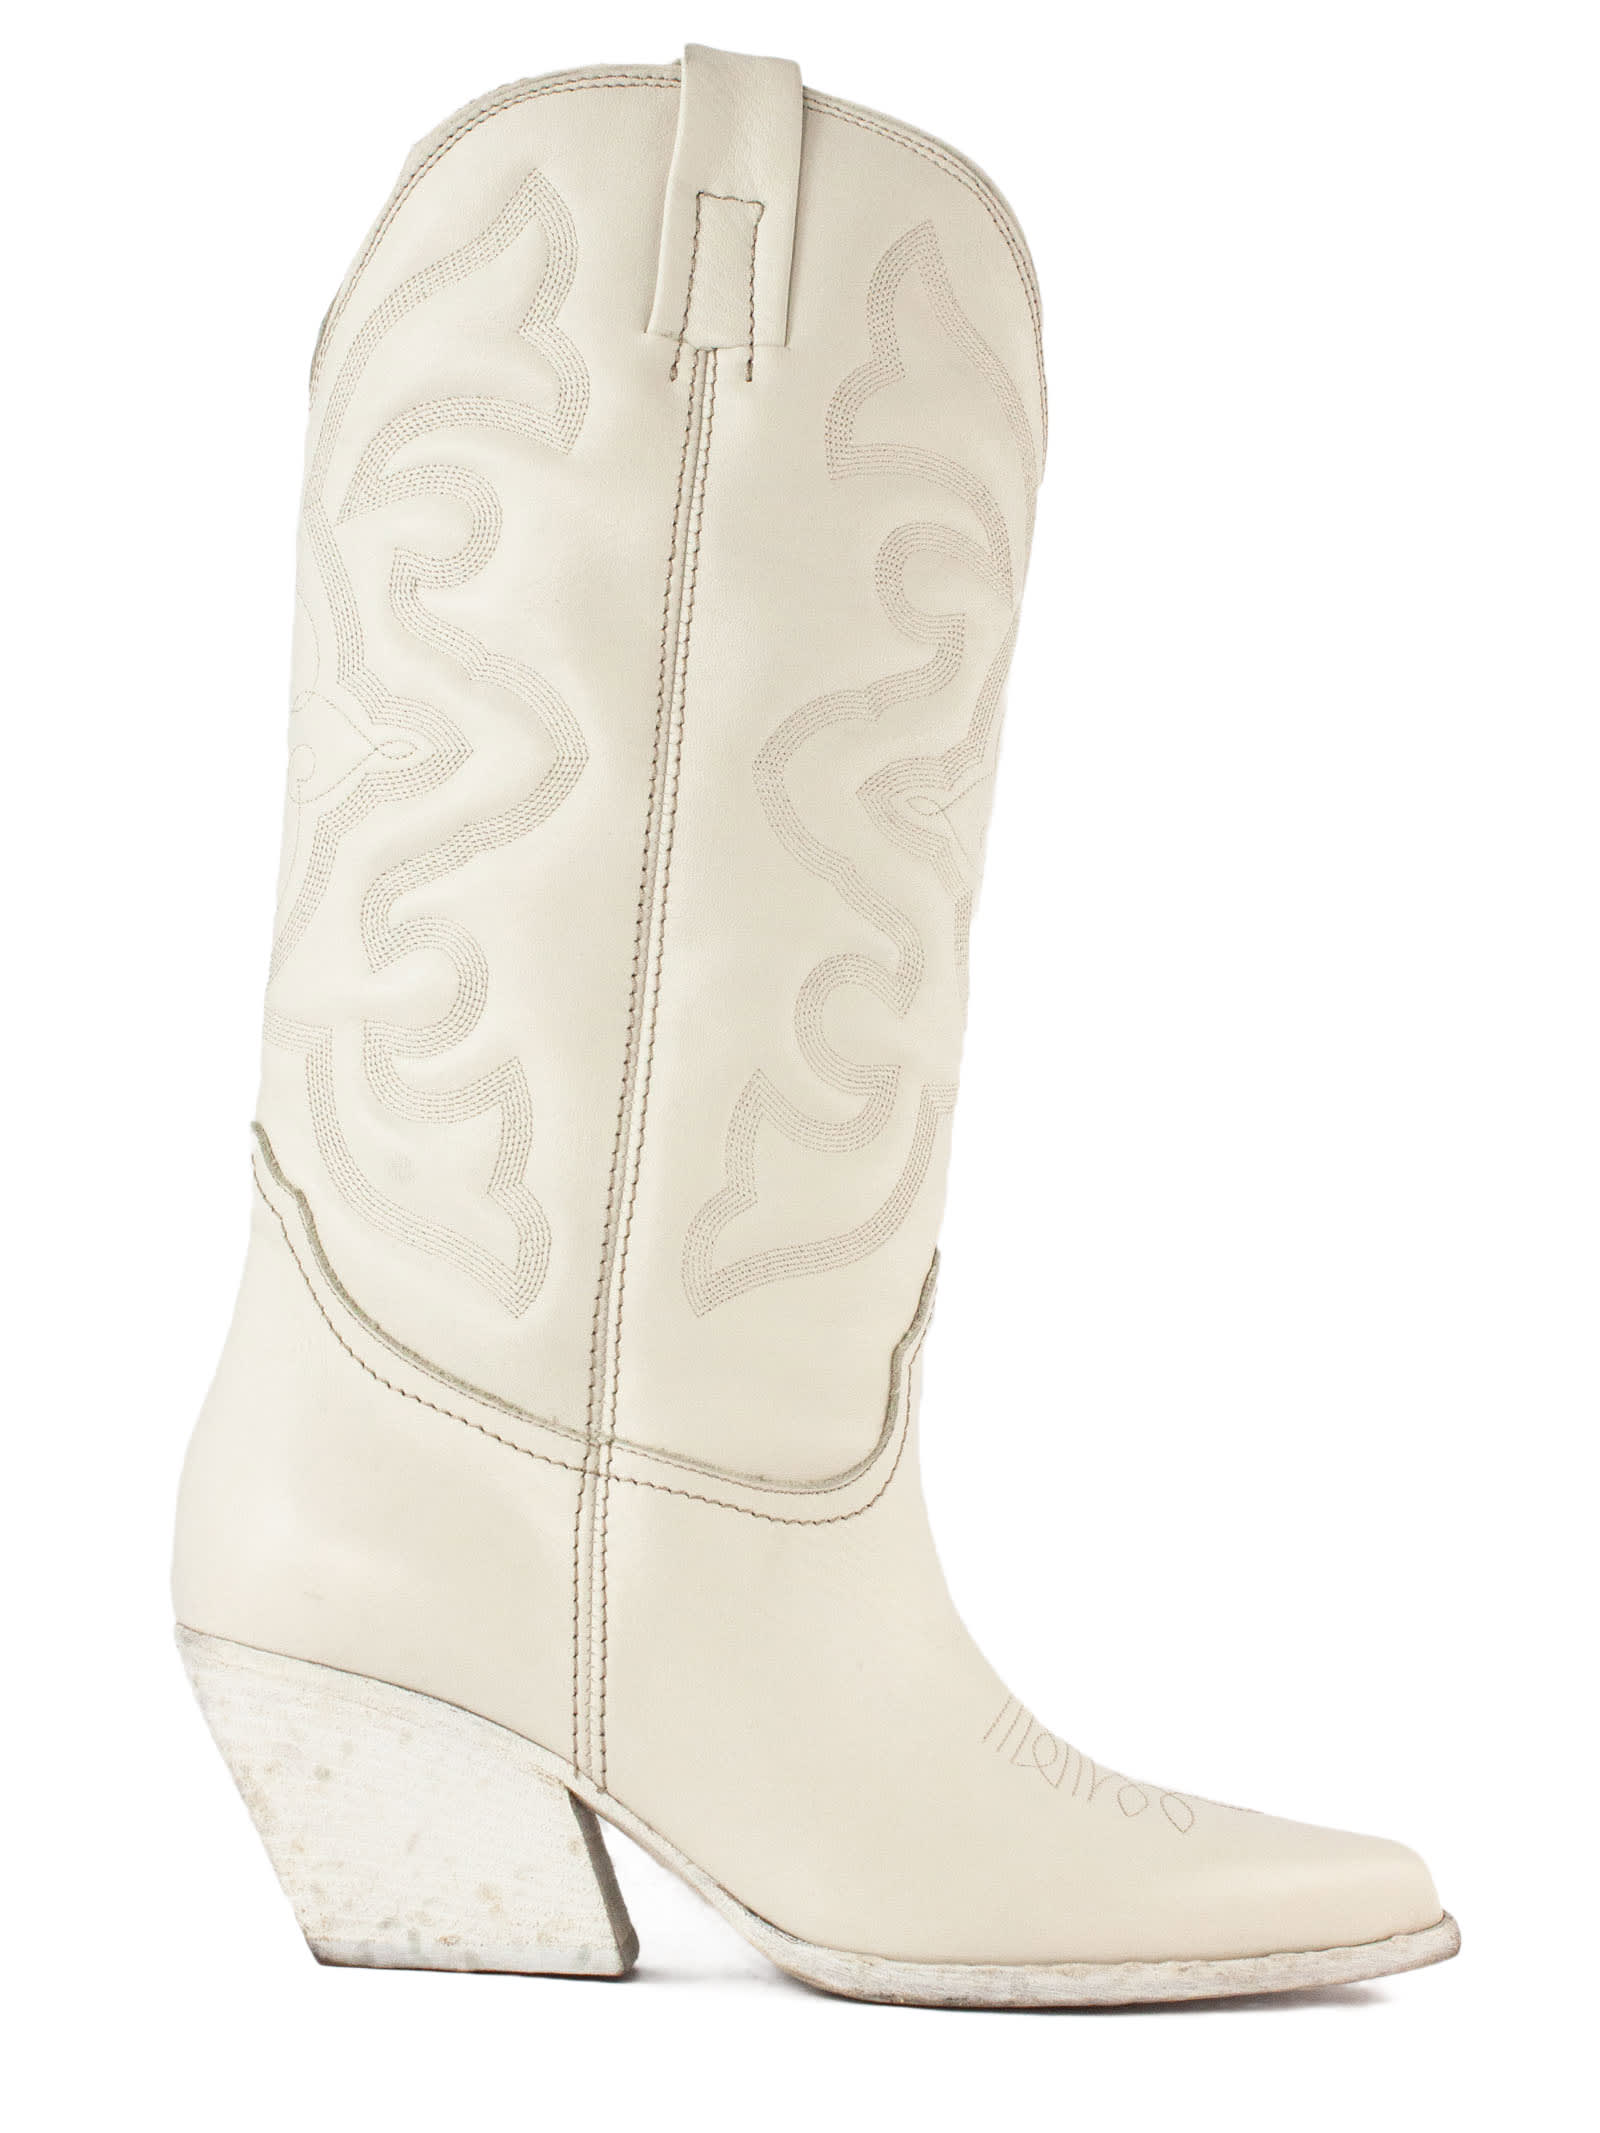 Shop Elena Iachi White Leather Texan Boots